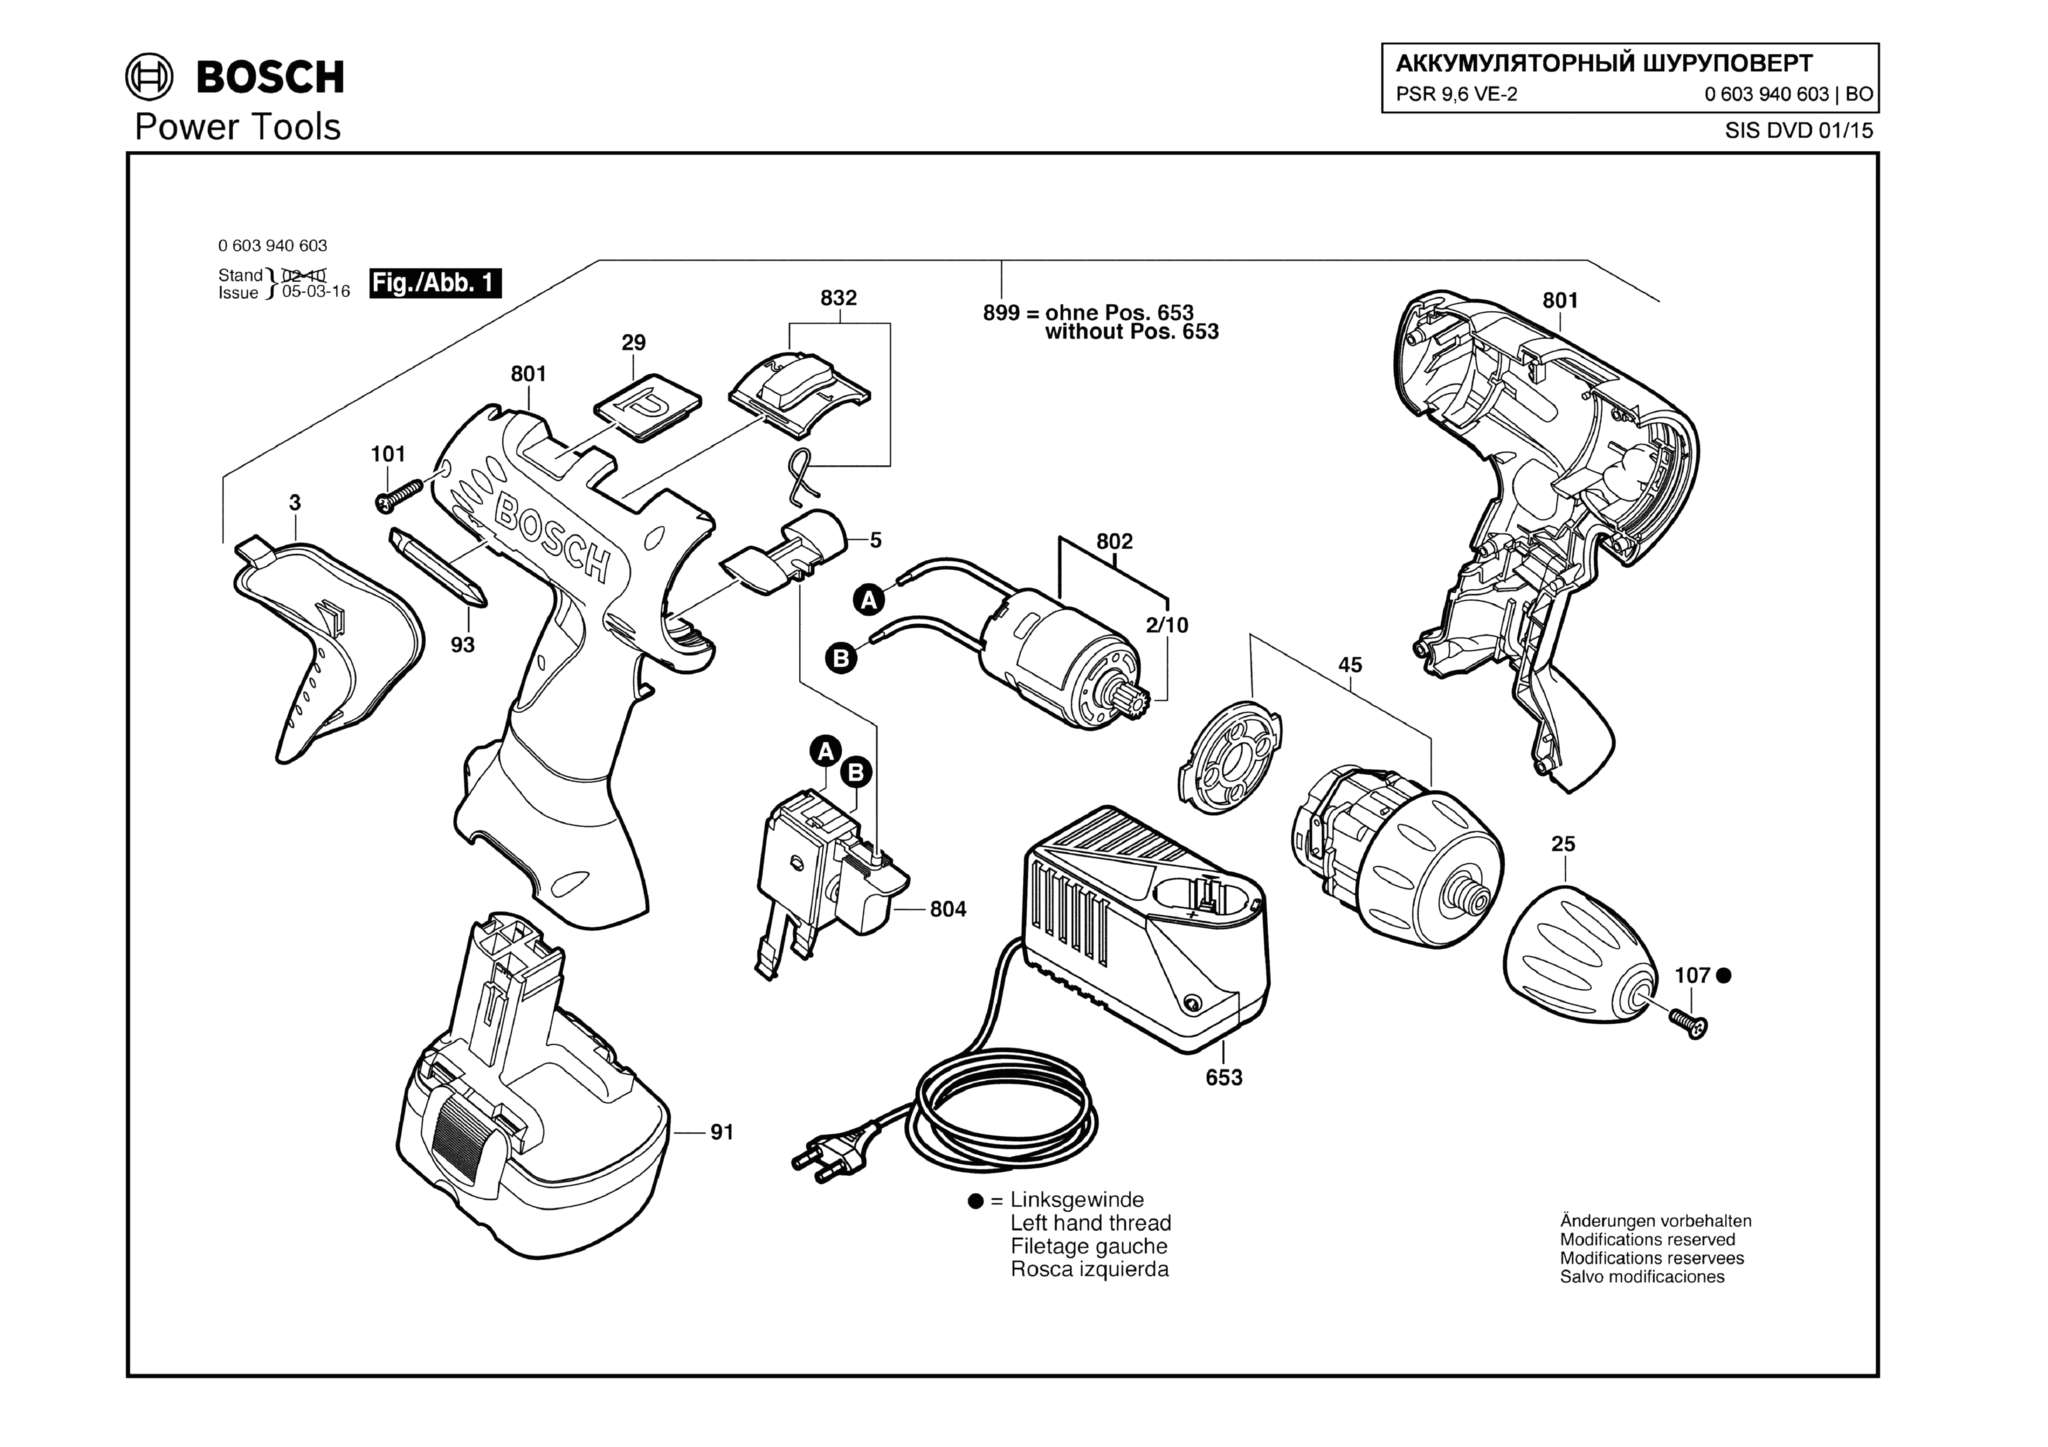 Запчасти, схема и деталировка Bosch PSR 9,6 VE-2 (ТИП 0603940603)